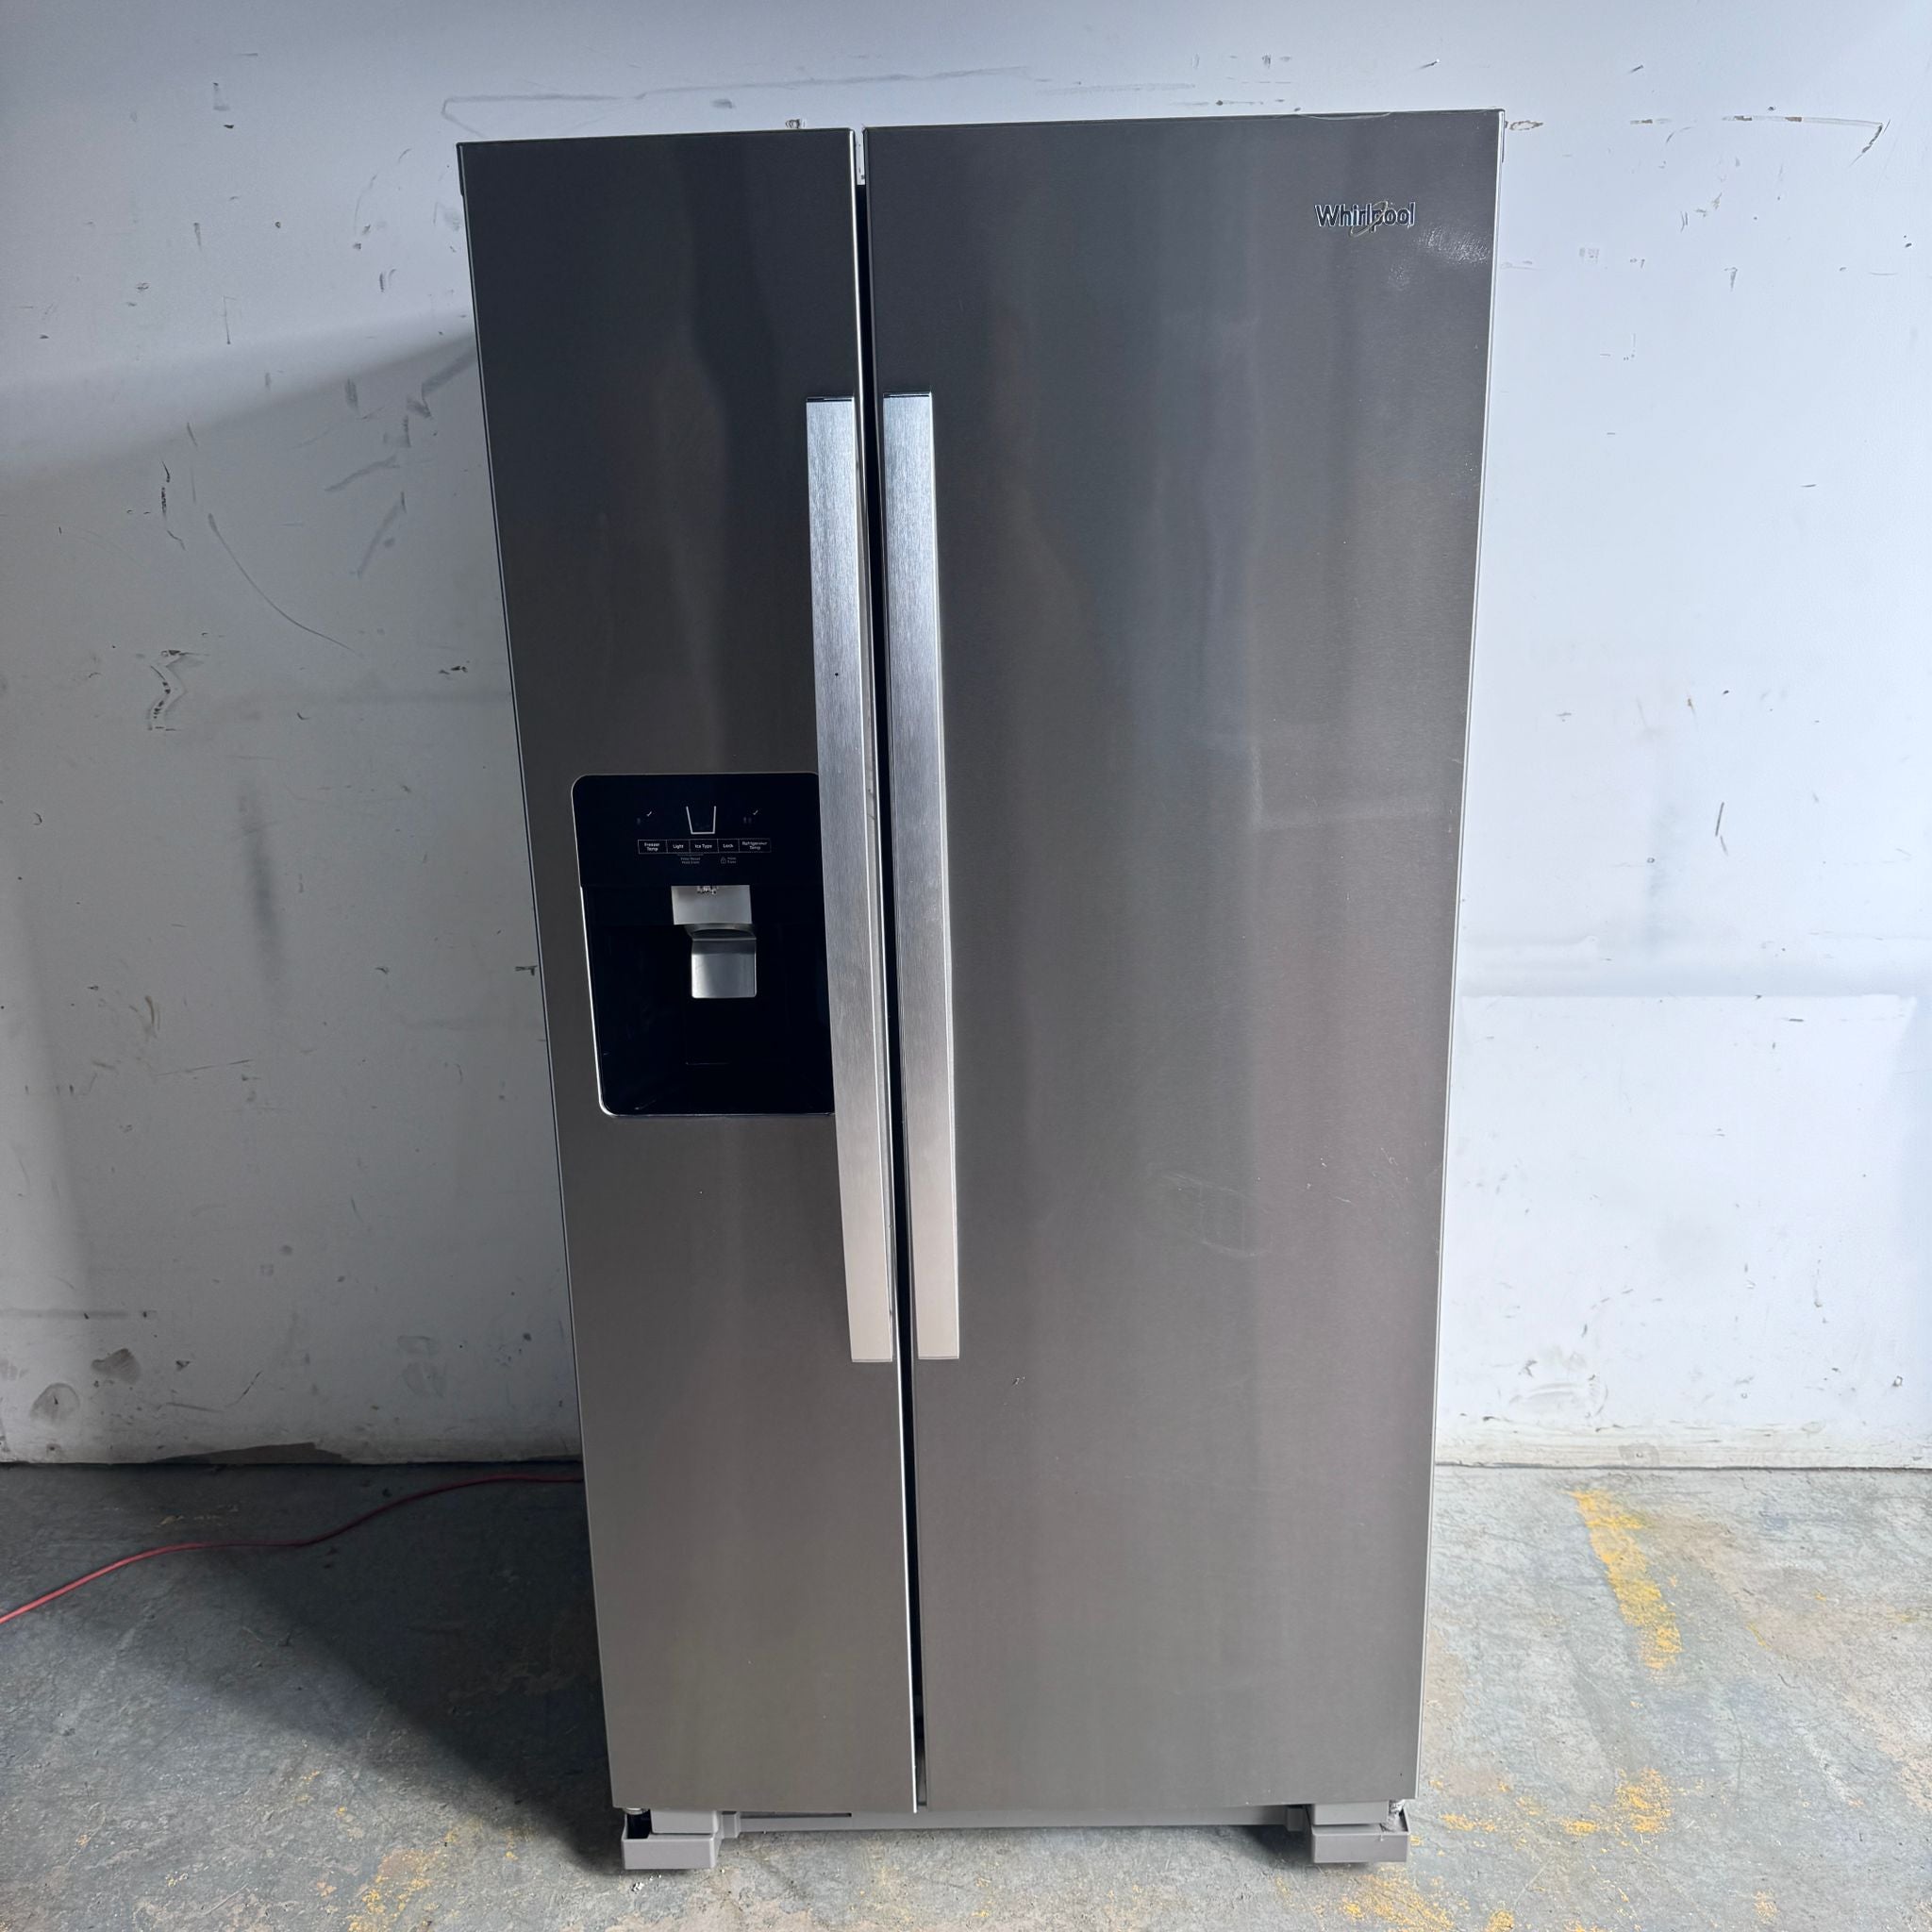 Whirlpool-Stainless-Steel-Refrigerator